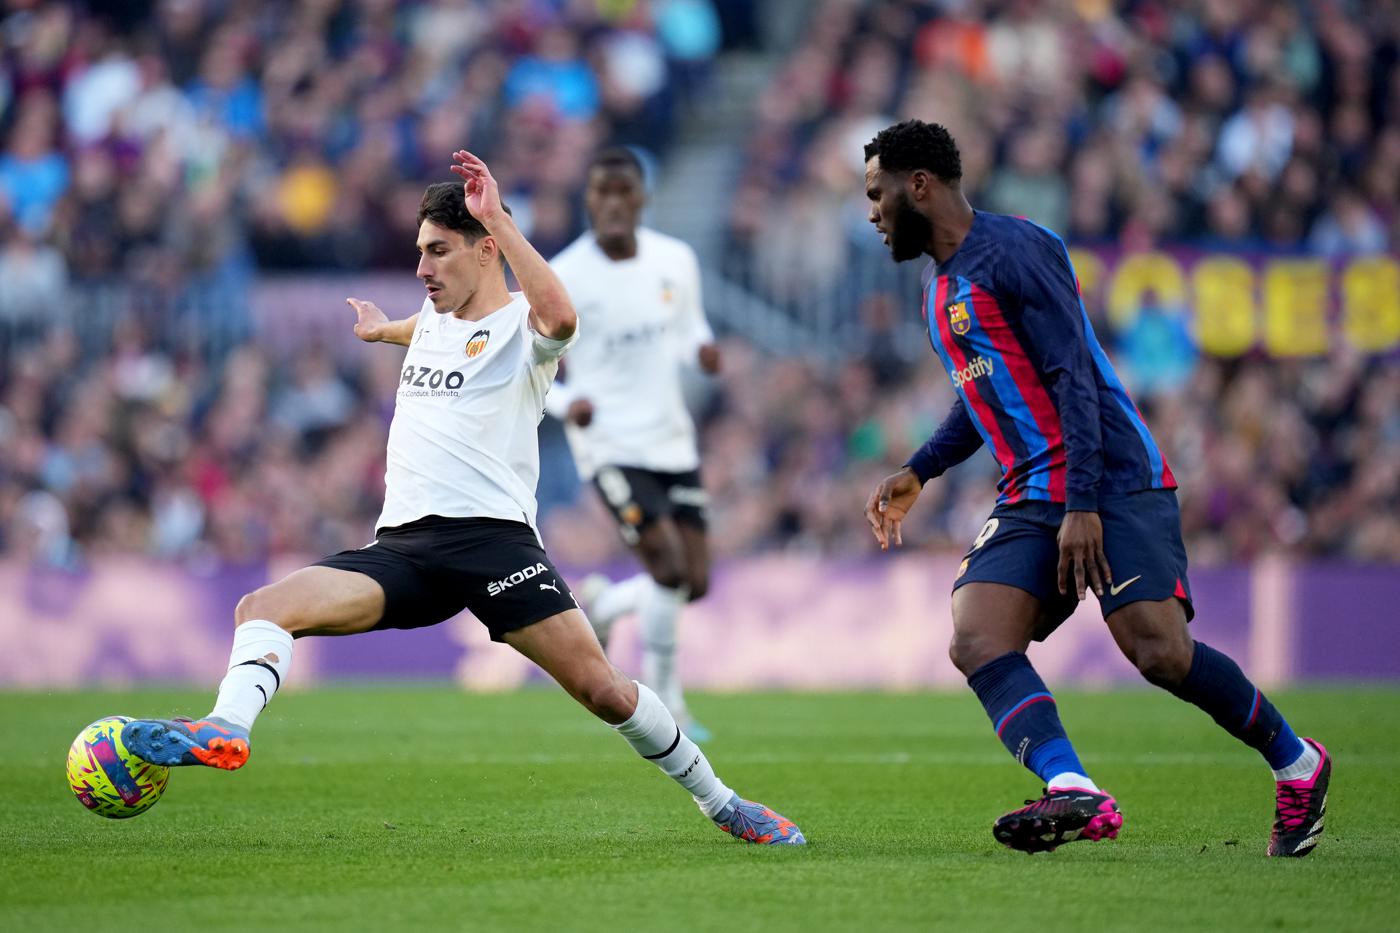 Barcelona - Valencia - 1:0. Spain Championship, round 24. Match review, statistics.